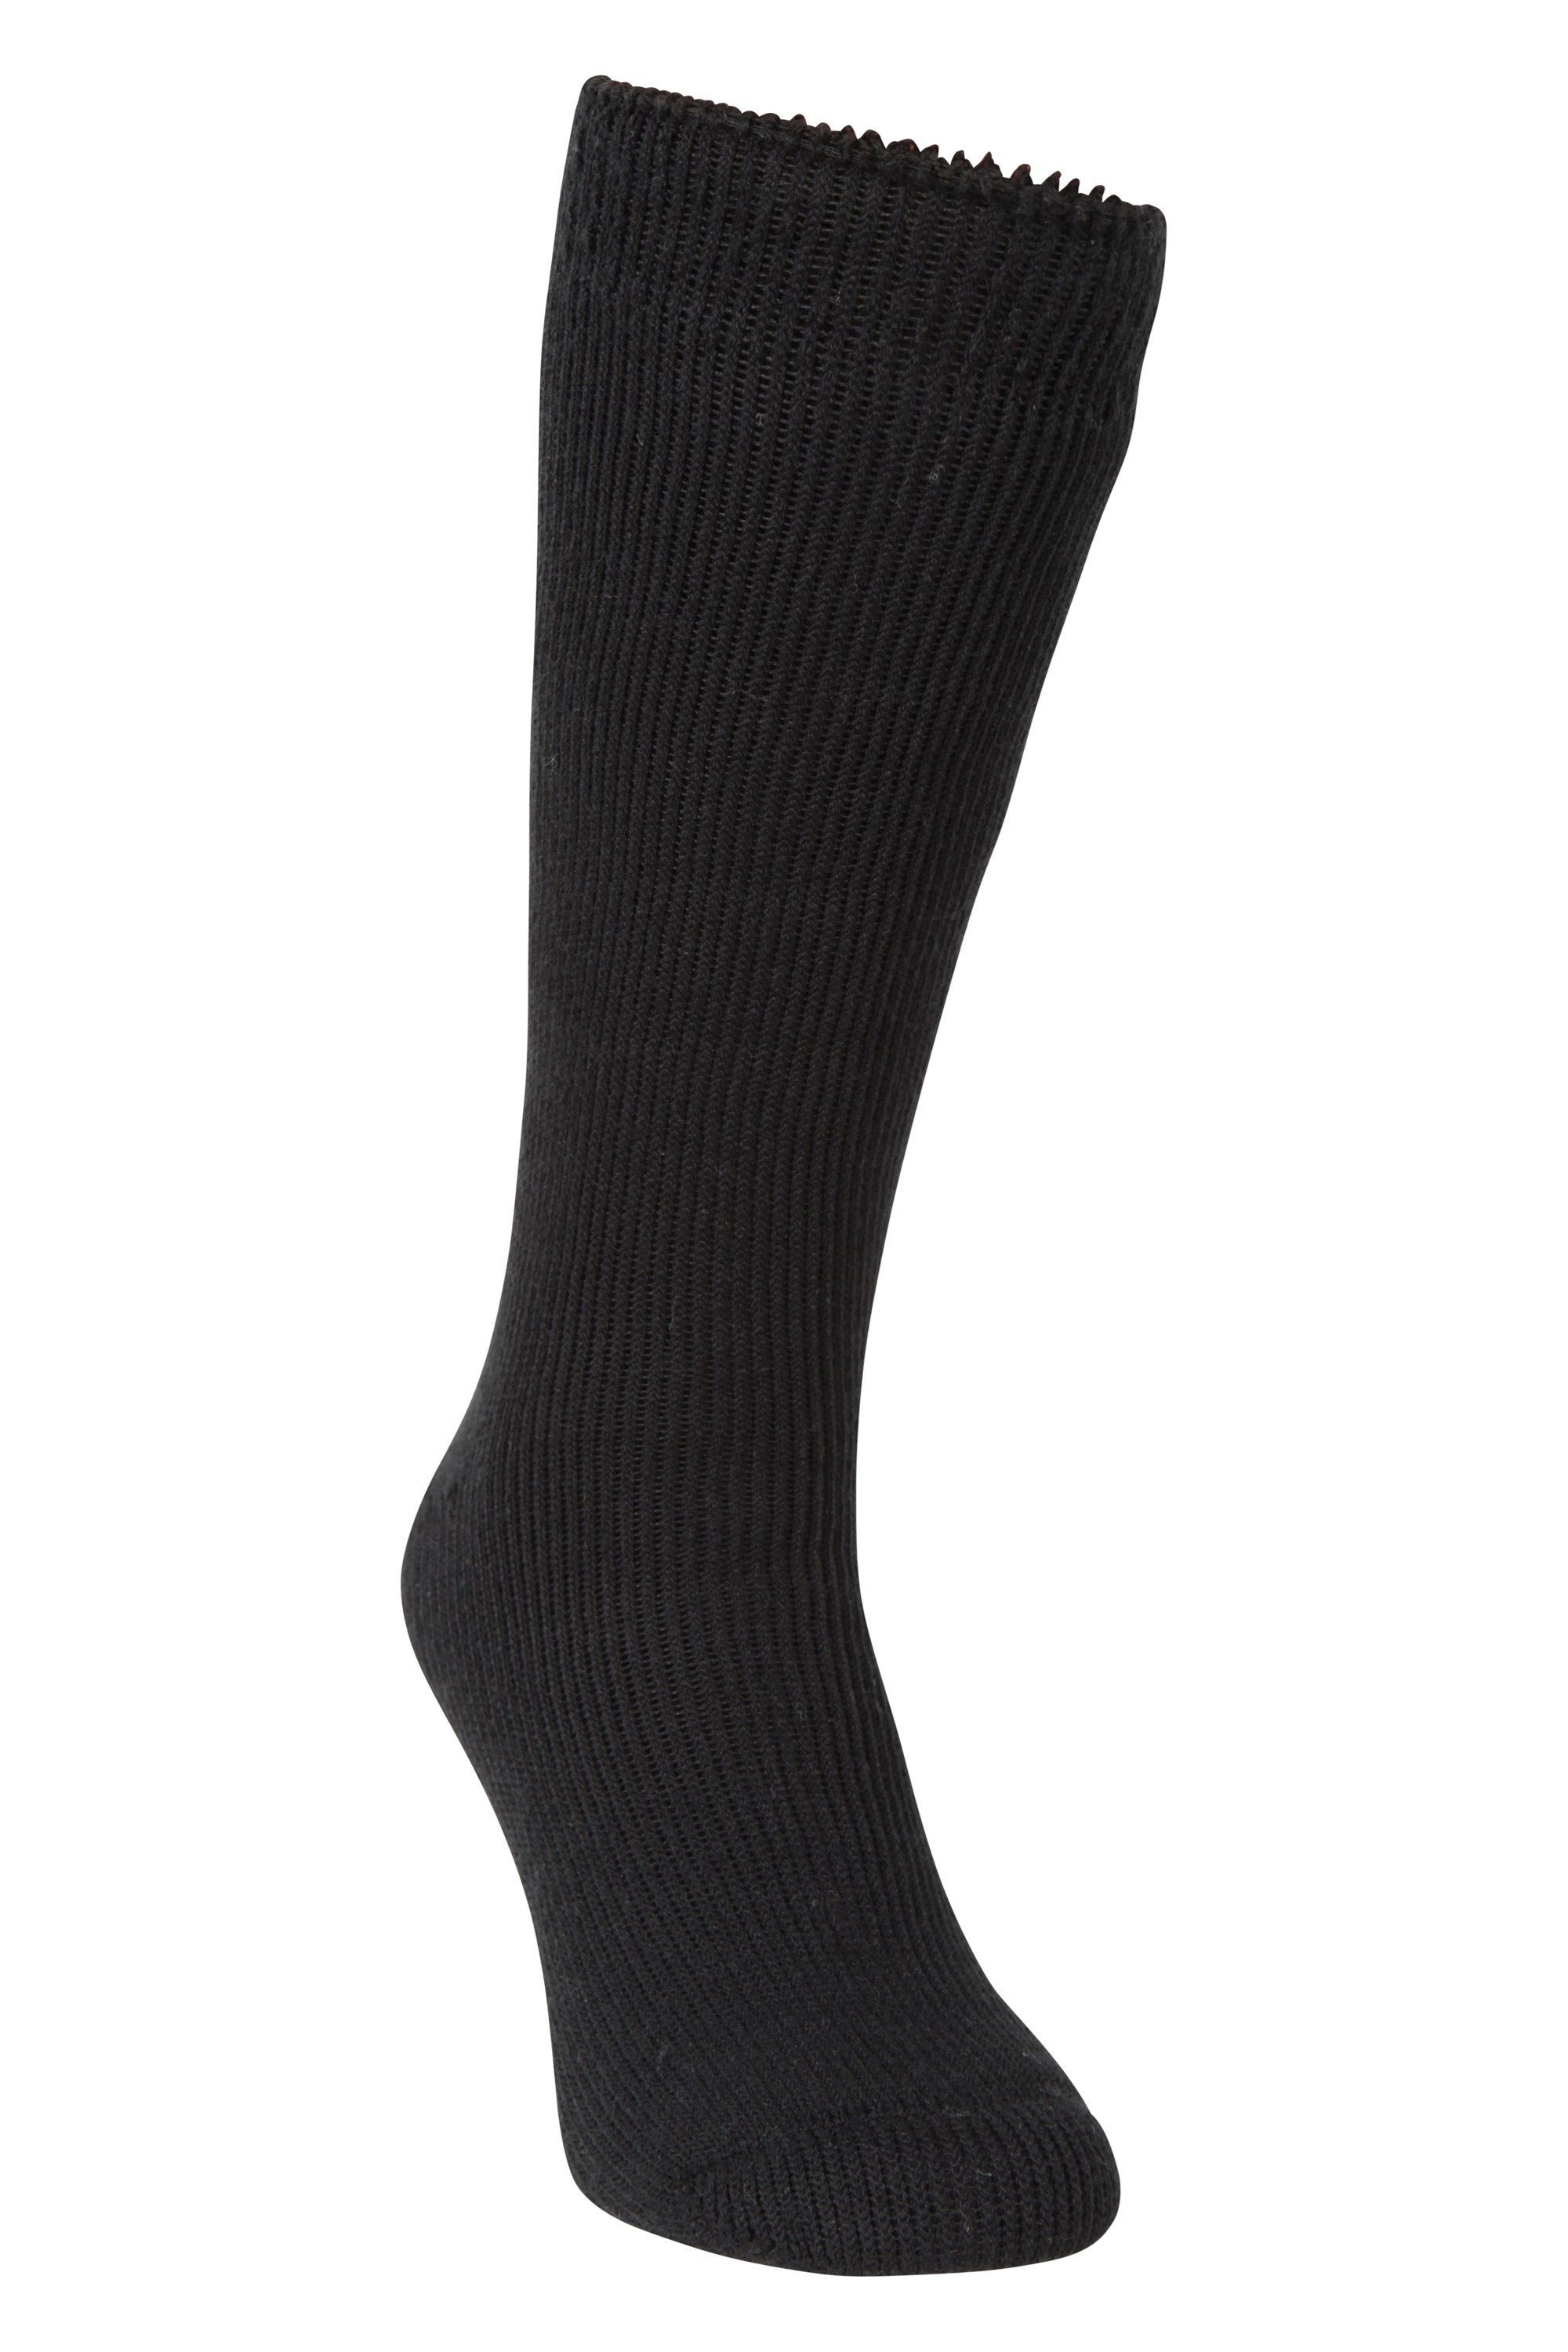 Mens Thermal Socks - Black